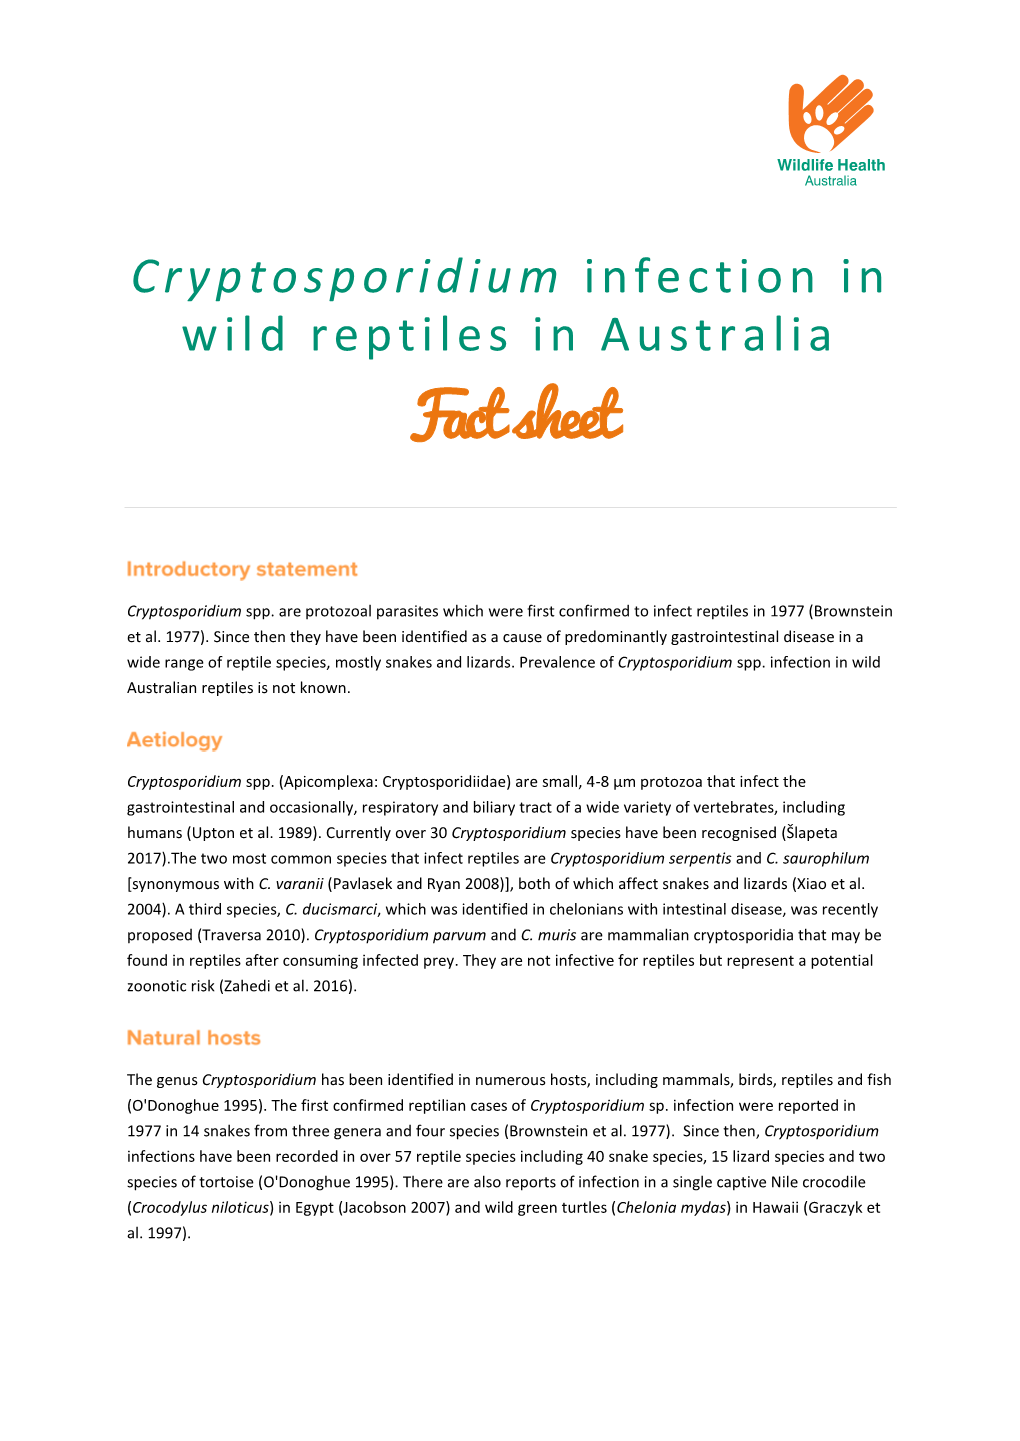 Cryptosporidium Infection in Wild Reptiles in Australia Fact Sheet